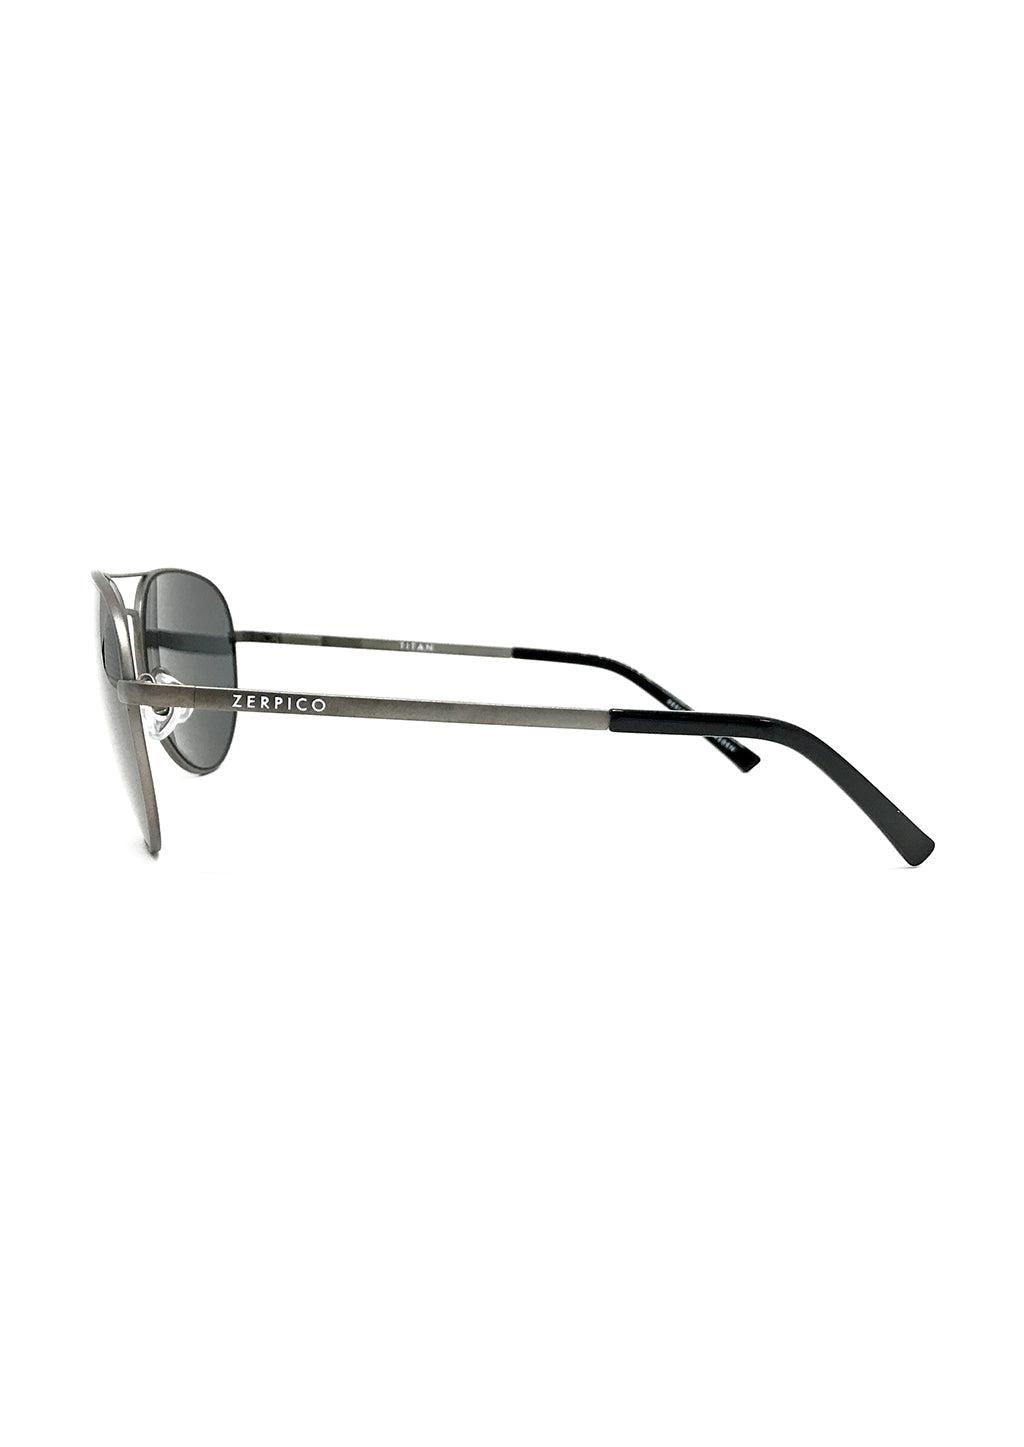 Titanium Aviator Sunglasses  - Rare Complete Pack - One of Each